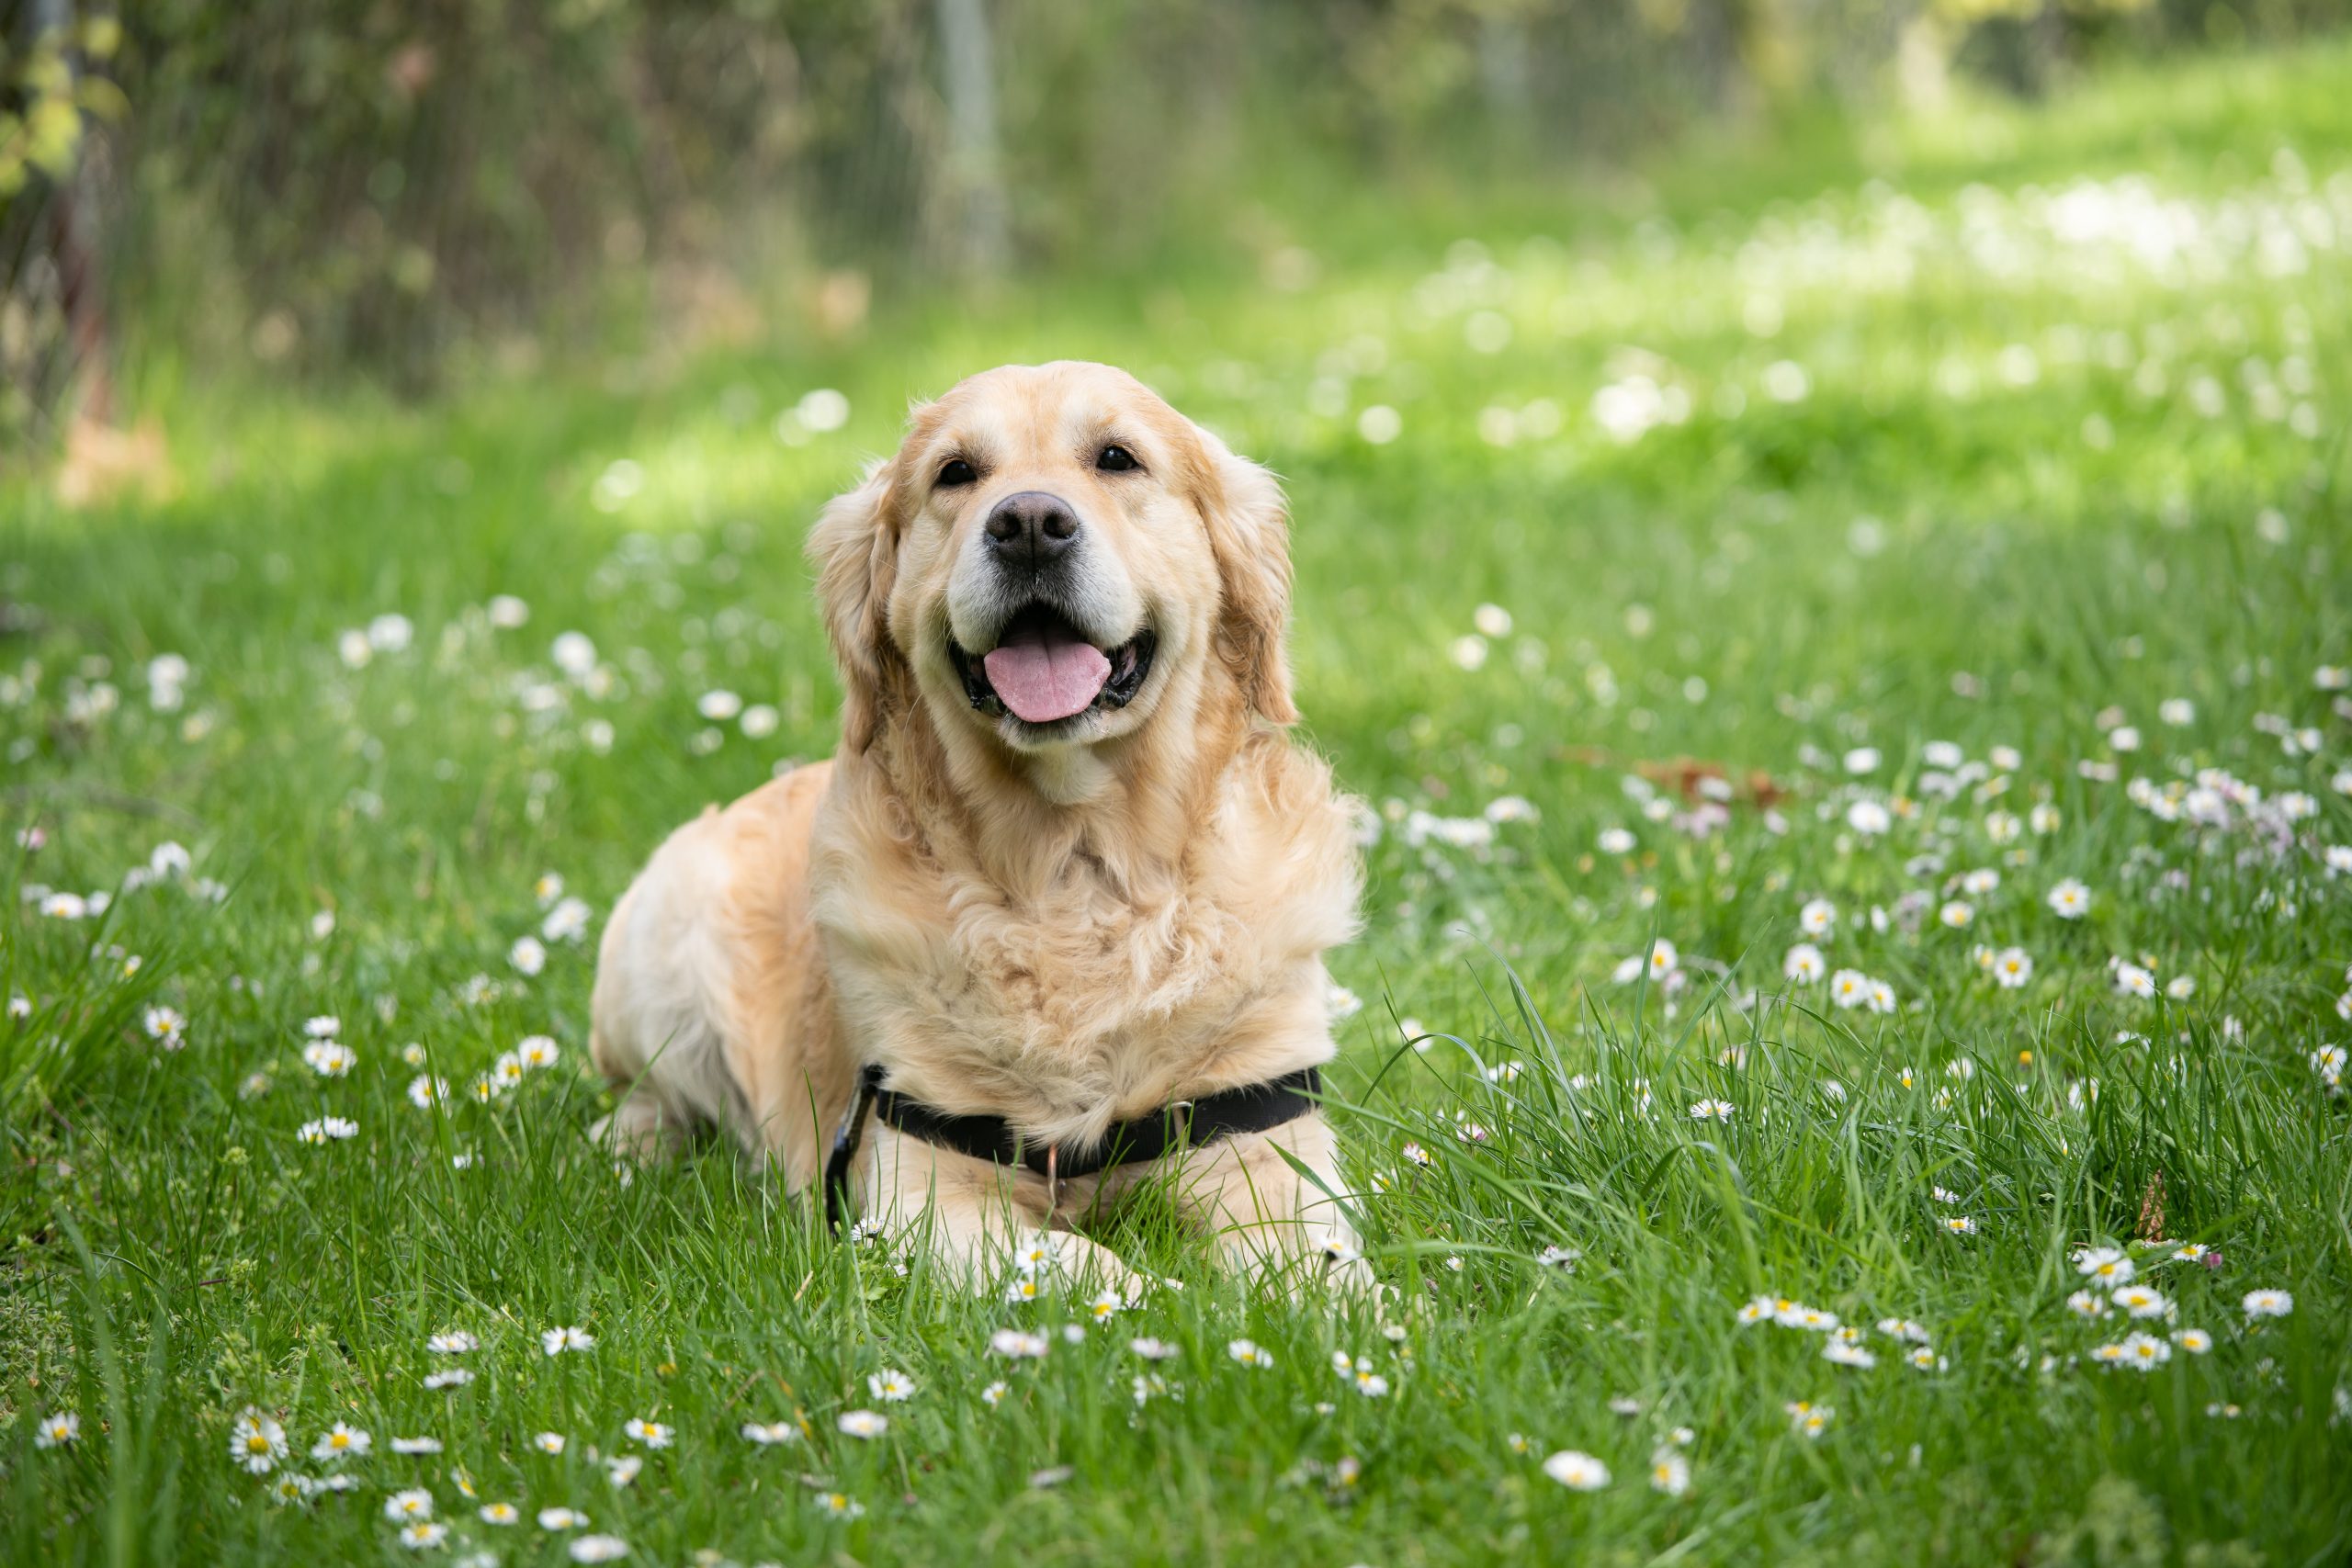 Understanding Canine Hip Dysplasia